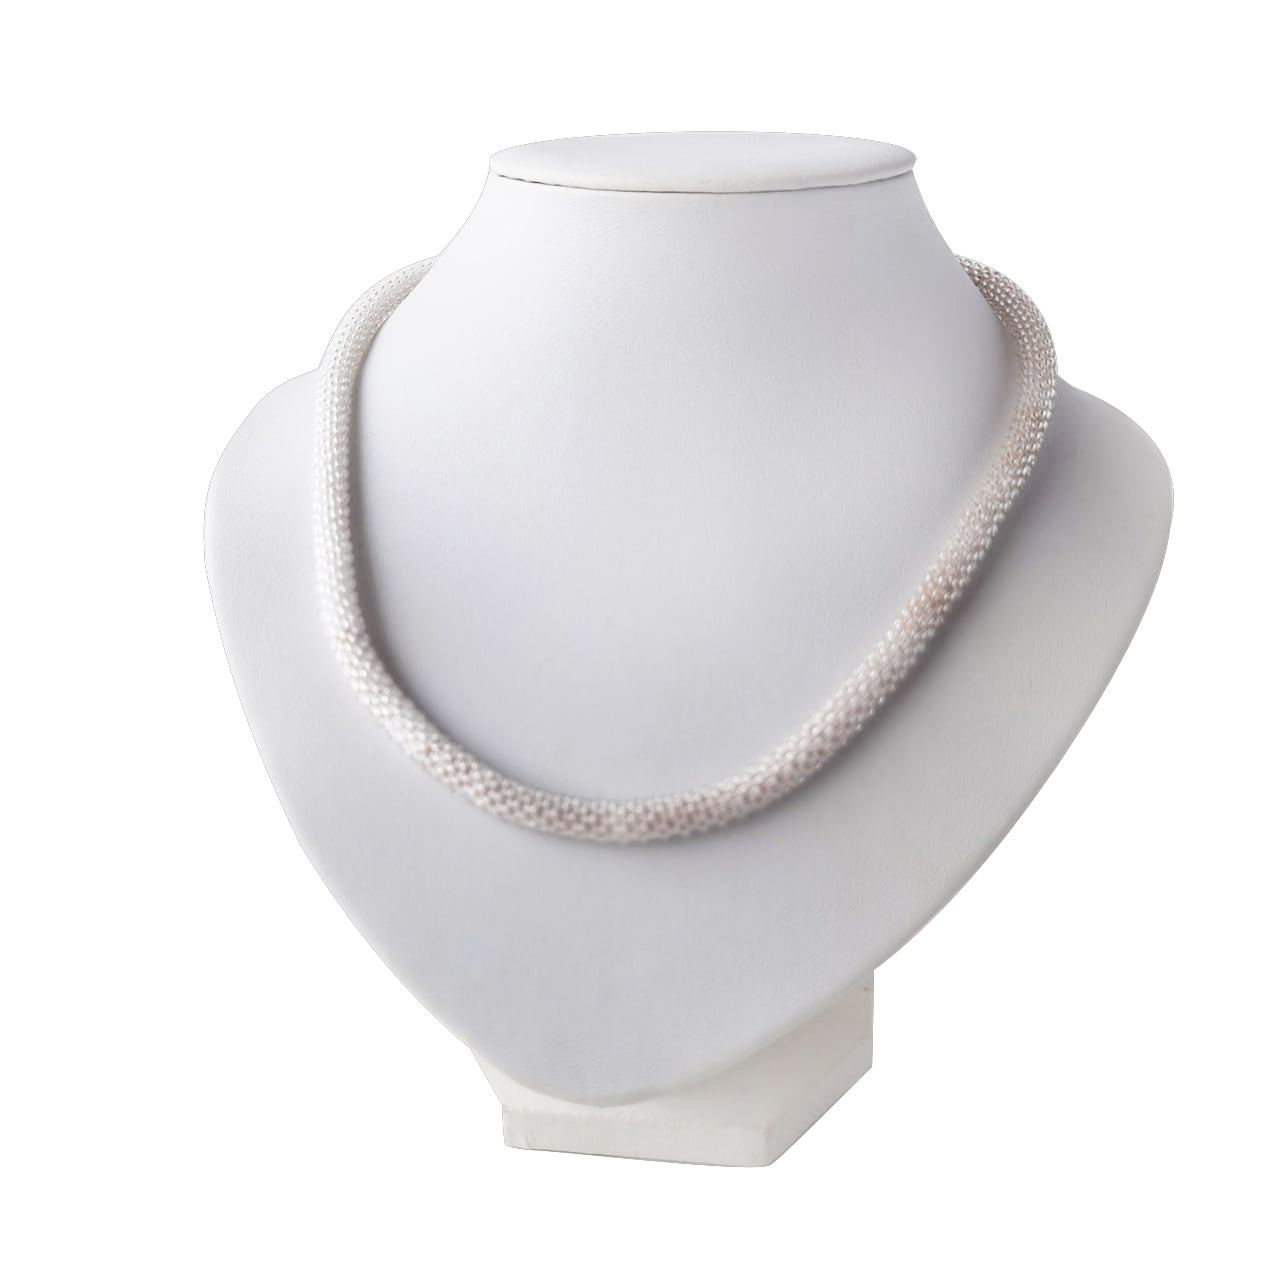 Layla Bead Crochet necklace, Boho Chocker necklace Bead Crochet Necklace, Artisan Jewelry